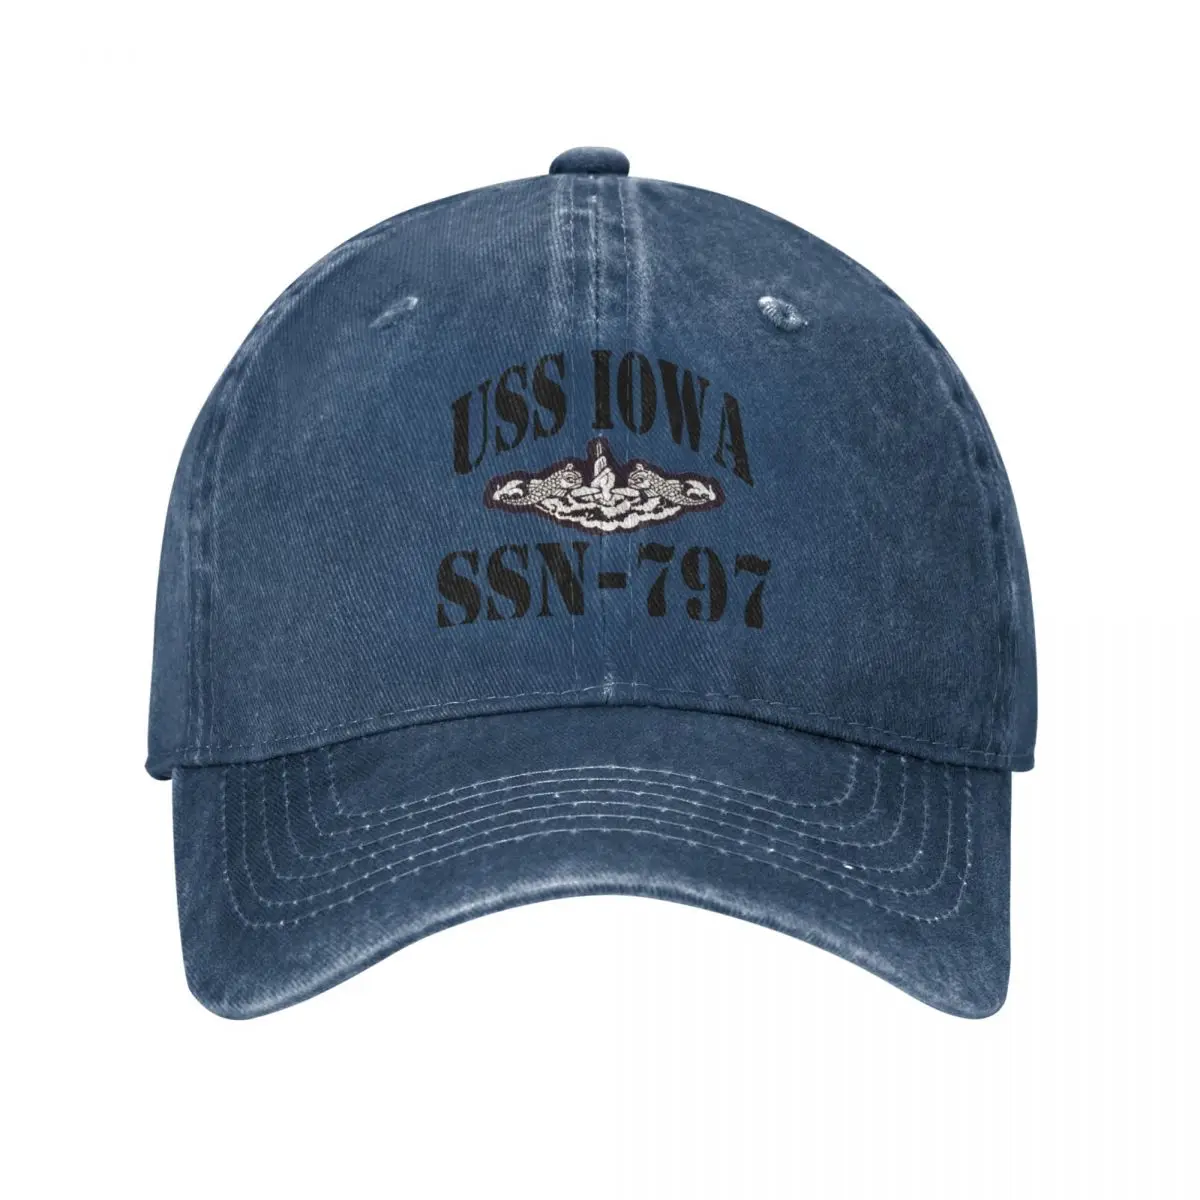 

USS IOWA (SSN-797) SHIP'S STORE Baseball Cap Gentleman Hat Caps Snapback Cap Golf Hat Women Men'S